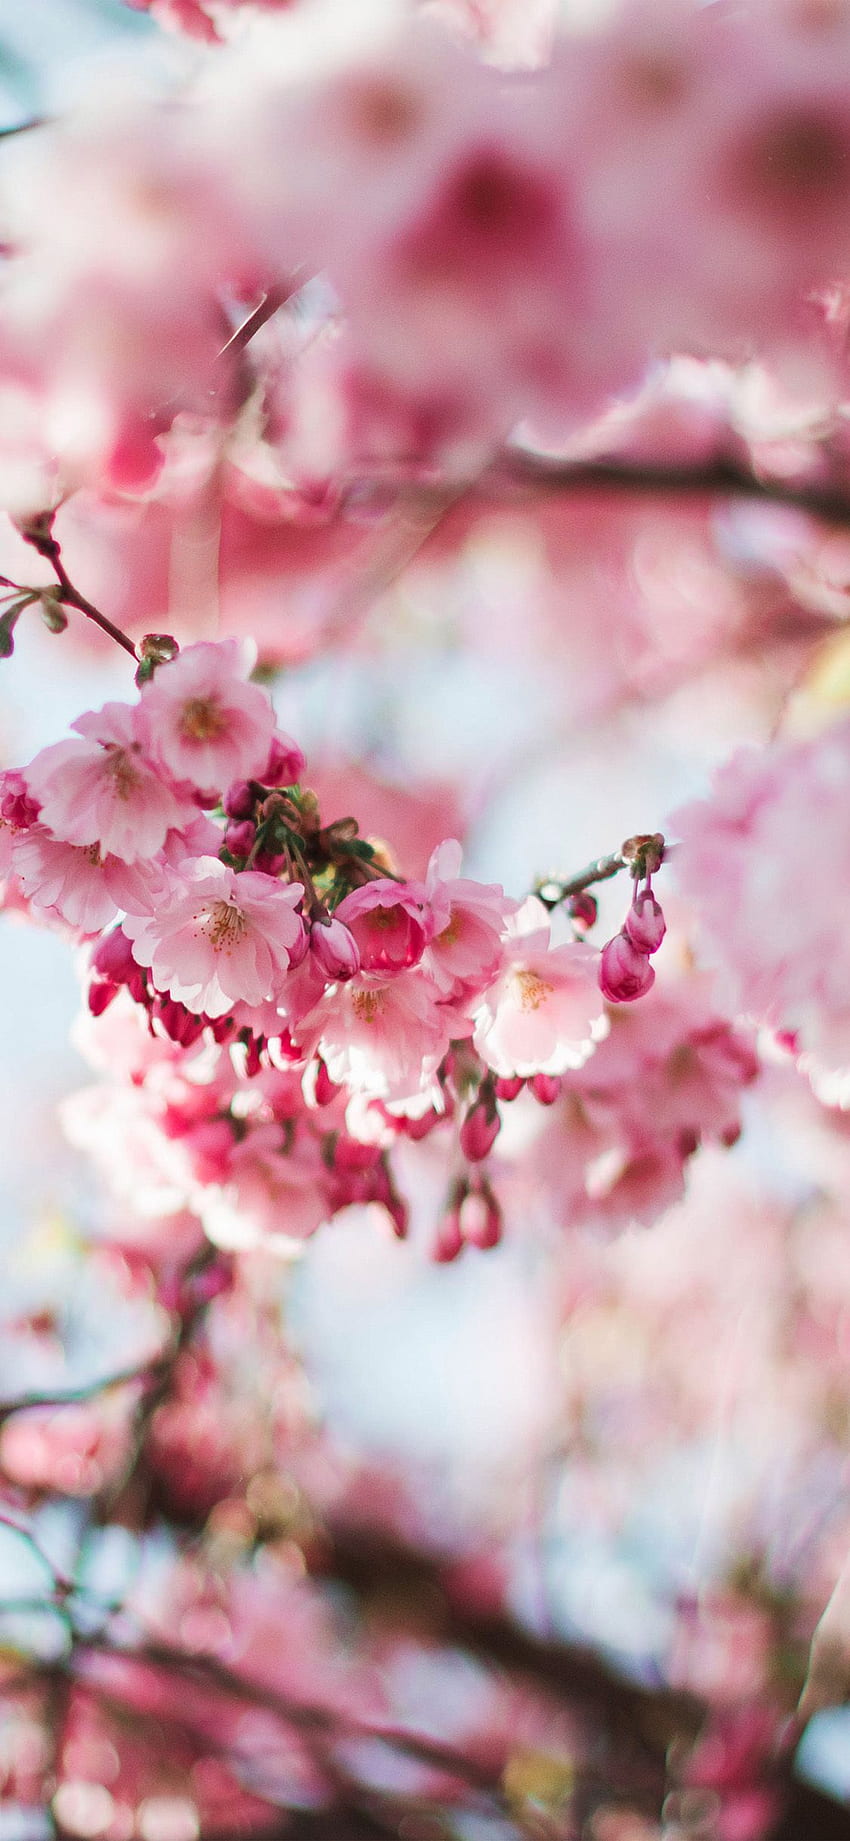 iPhoneX. primavera flor de cerezo árbol flor rosa naturaleza, Apple Blossom Tree fondo de pantalla del teléfono